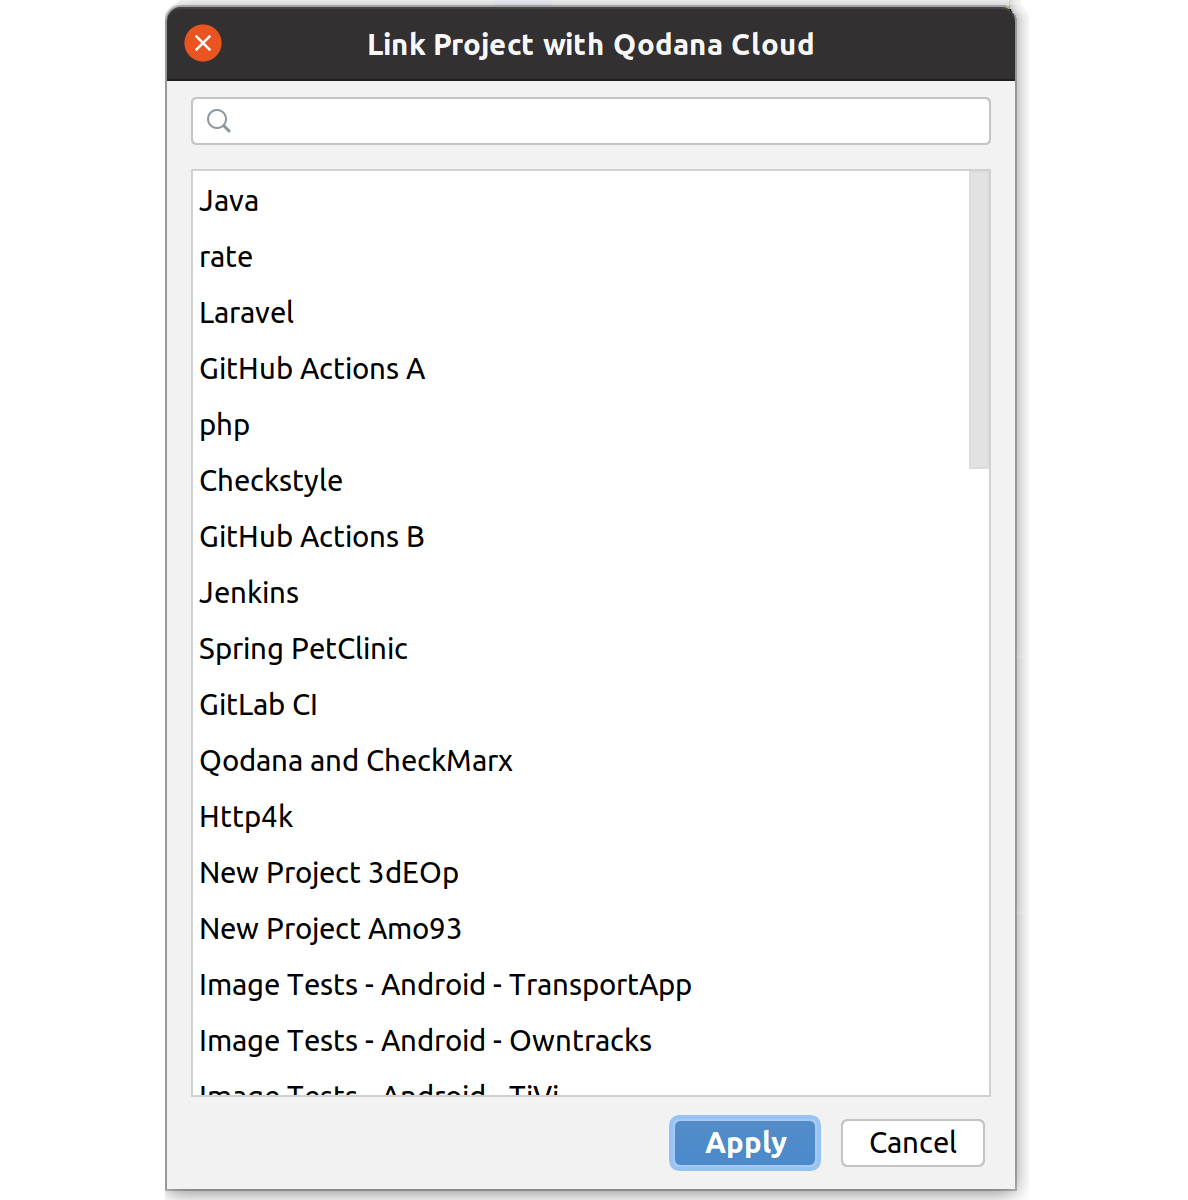 The link project with Qodana Cloud window